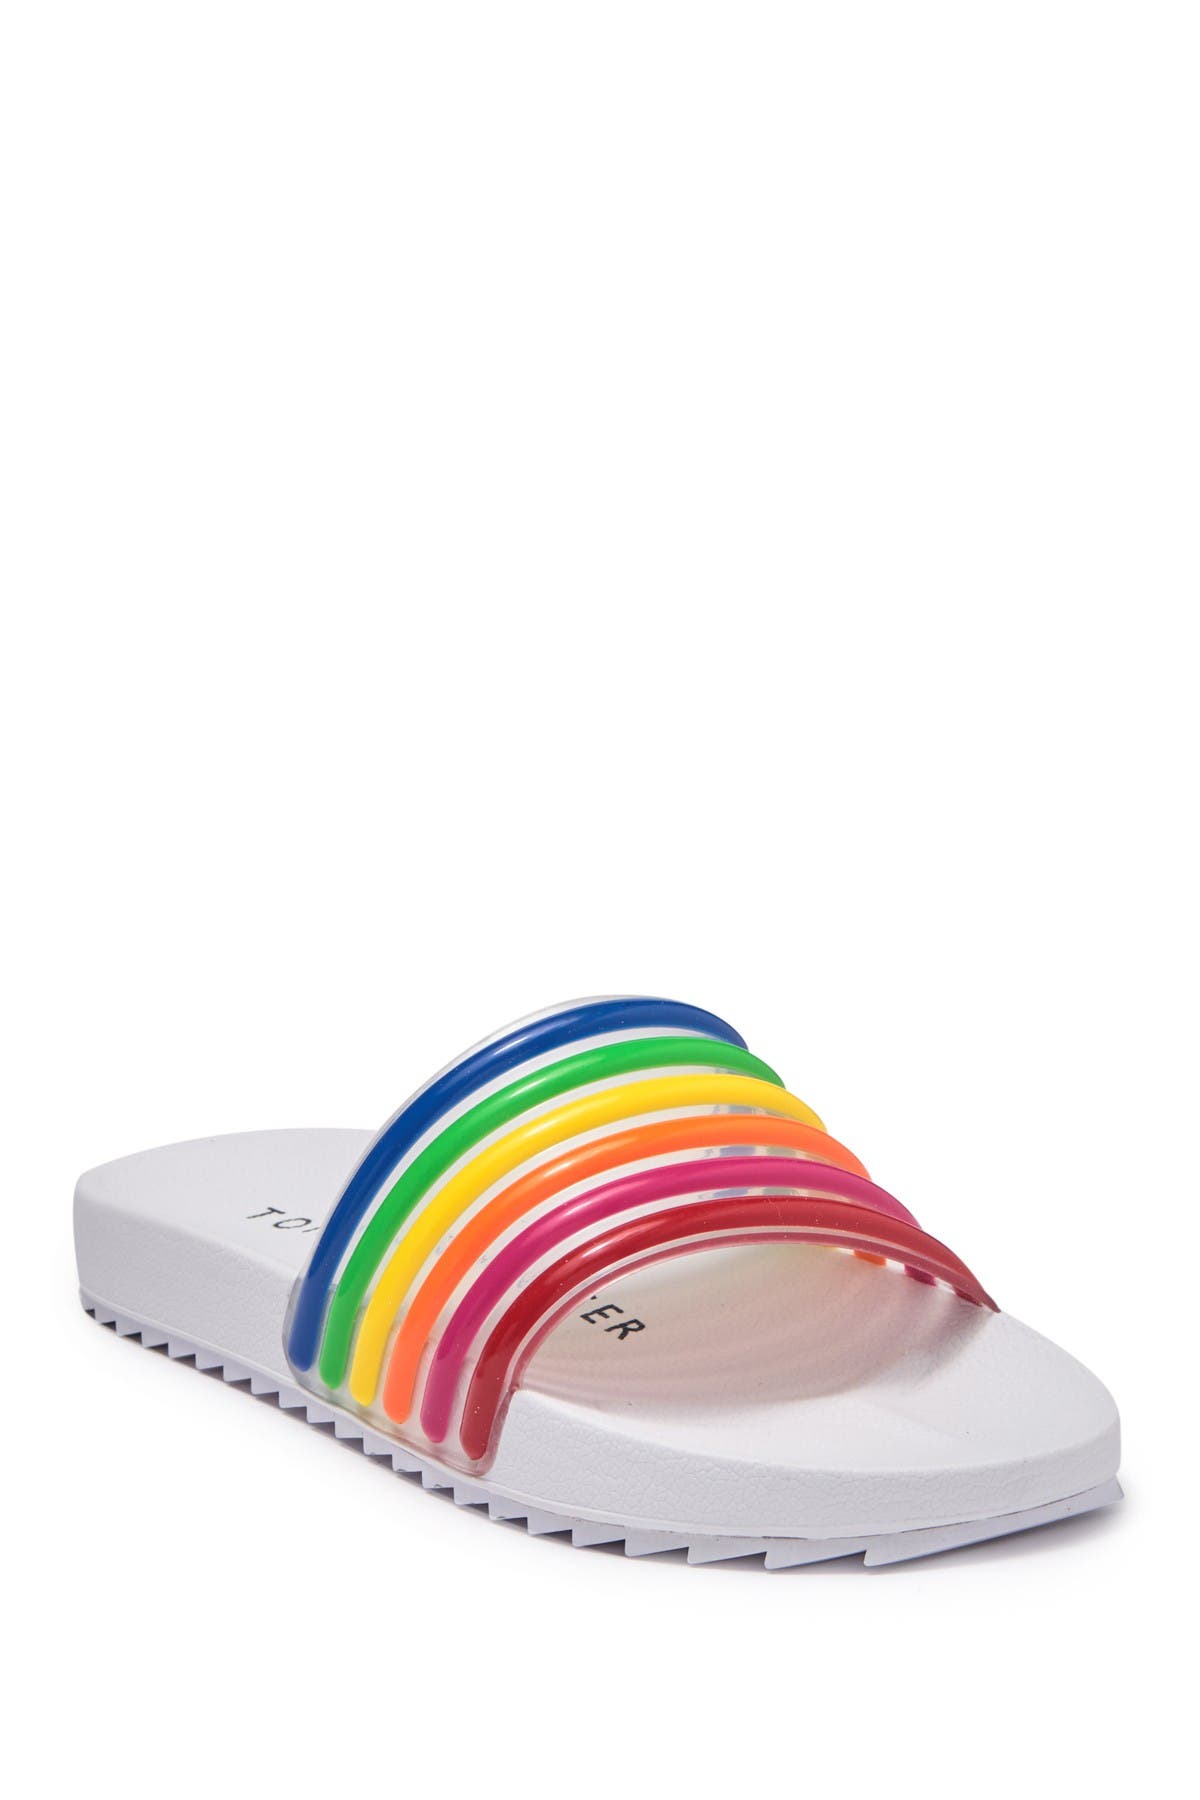 rainbow tommy hilfiger slides